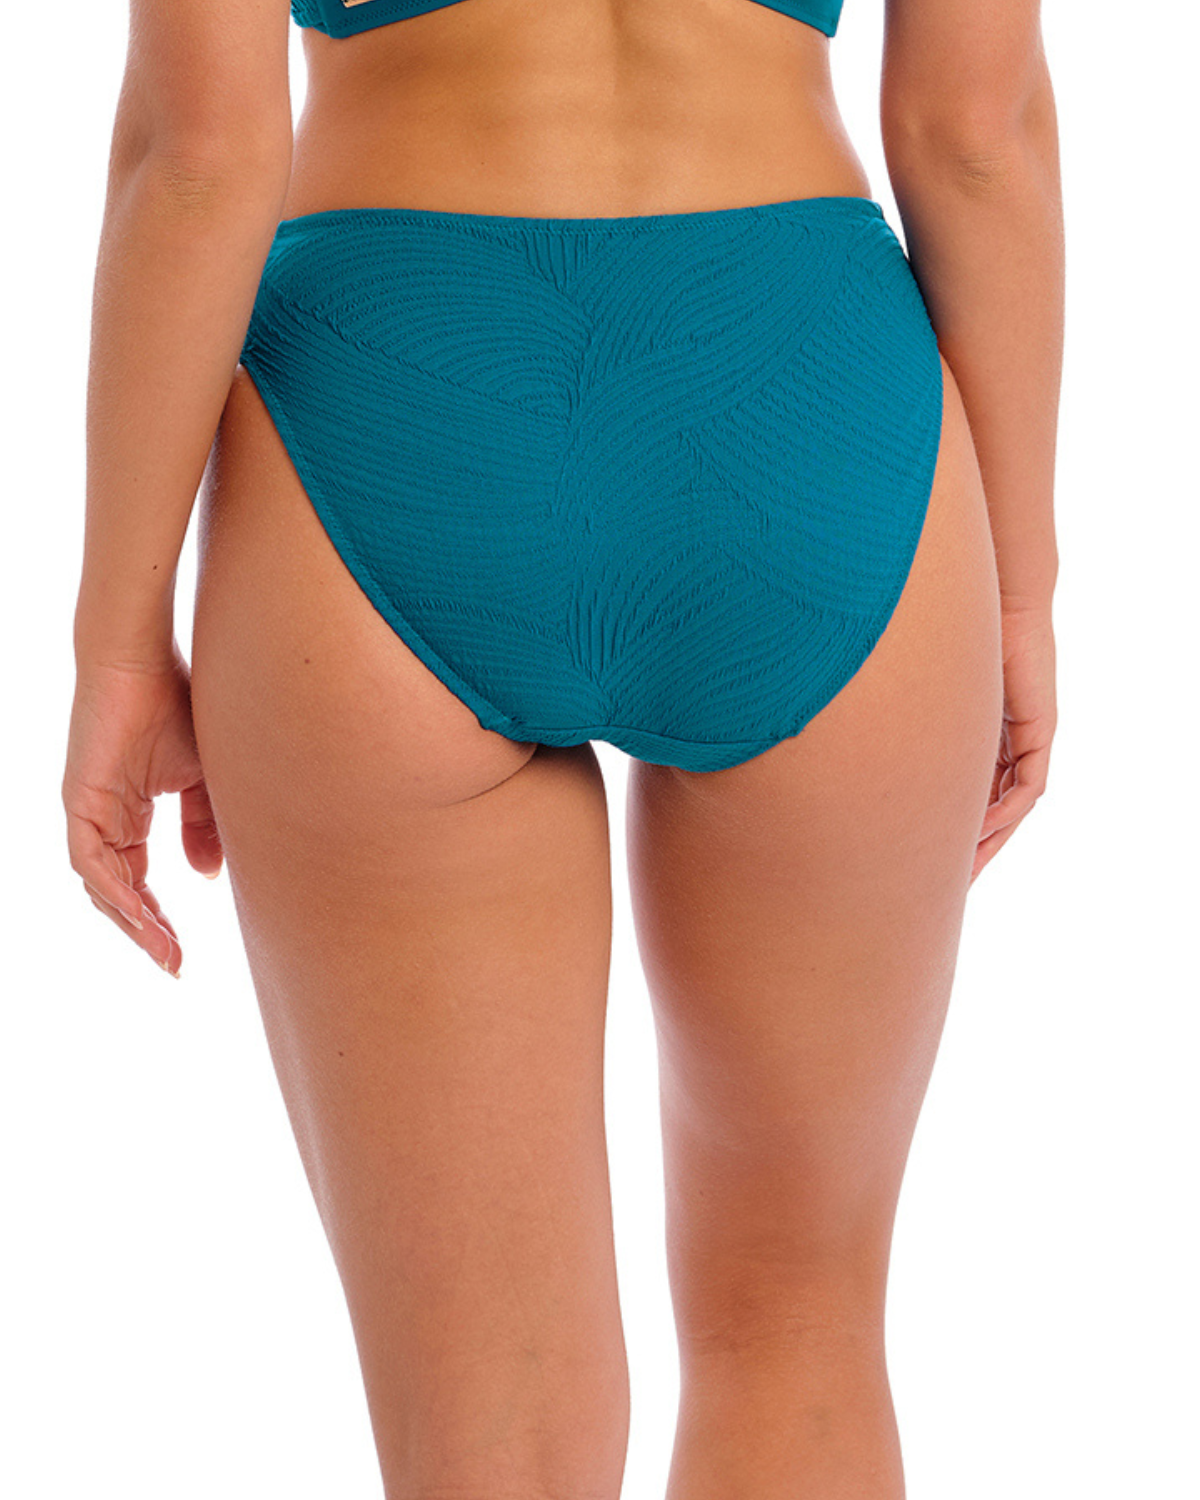 Model wearing a mid rise brief bikini bottom in blue